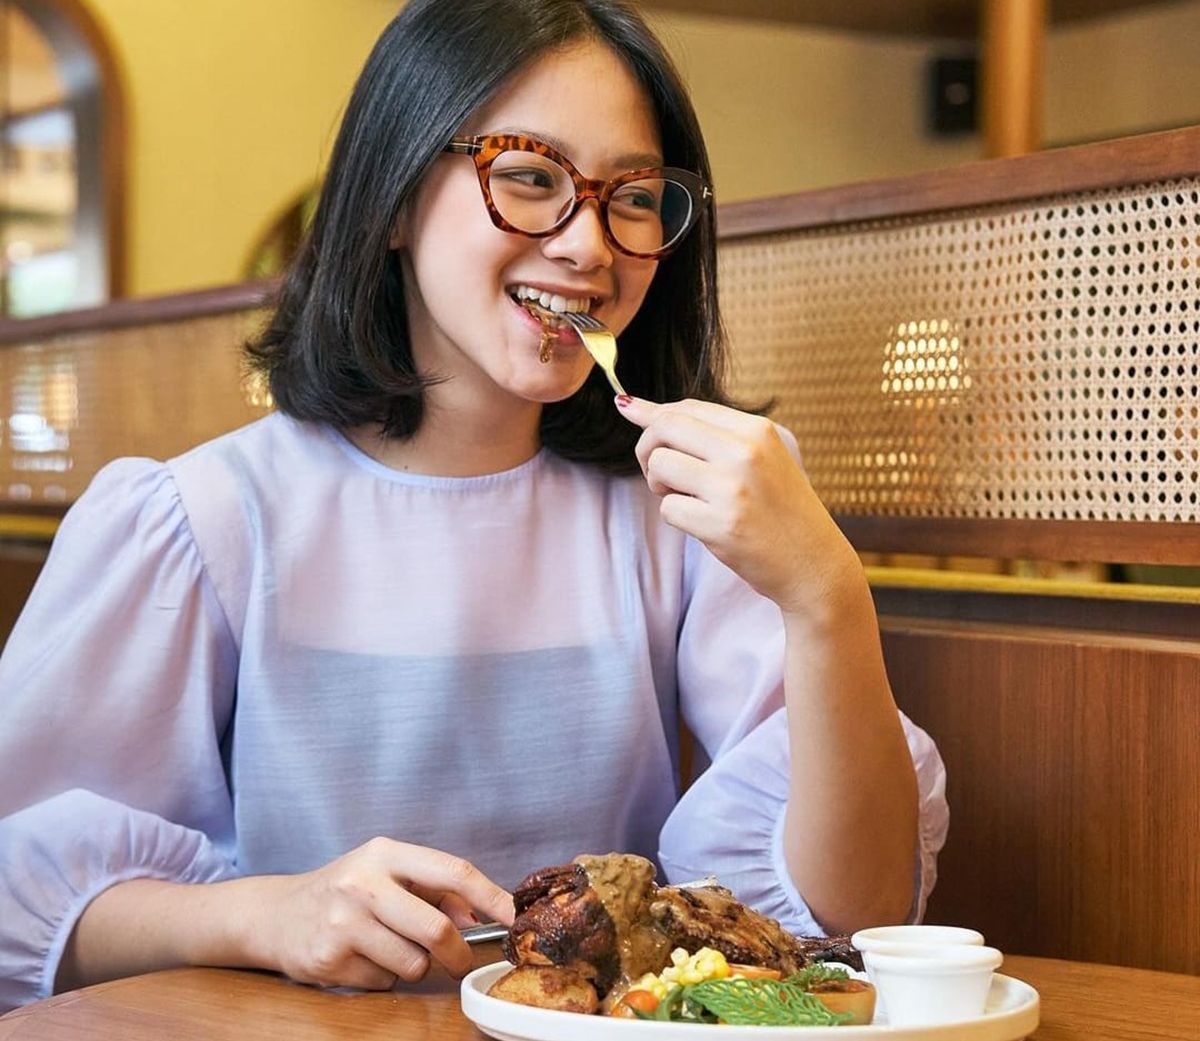 Rekomendasi Makan Enak di Bandung: Yuk Melipir ke  Gaya Brasserie yang Bikin  Hati Berseri-seri